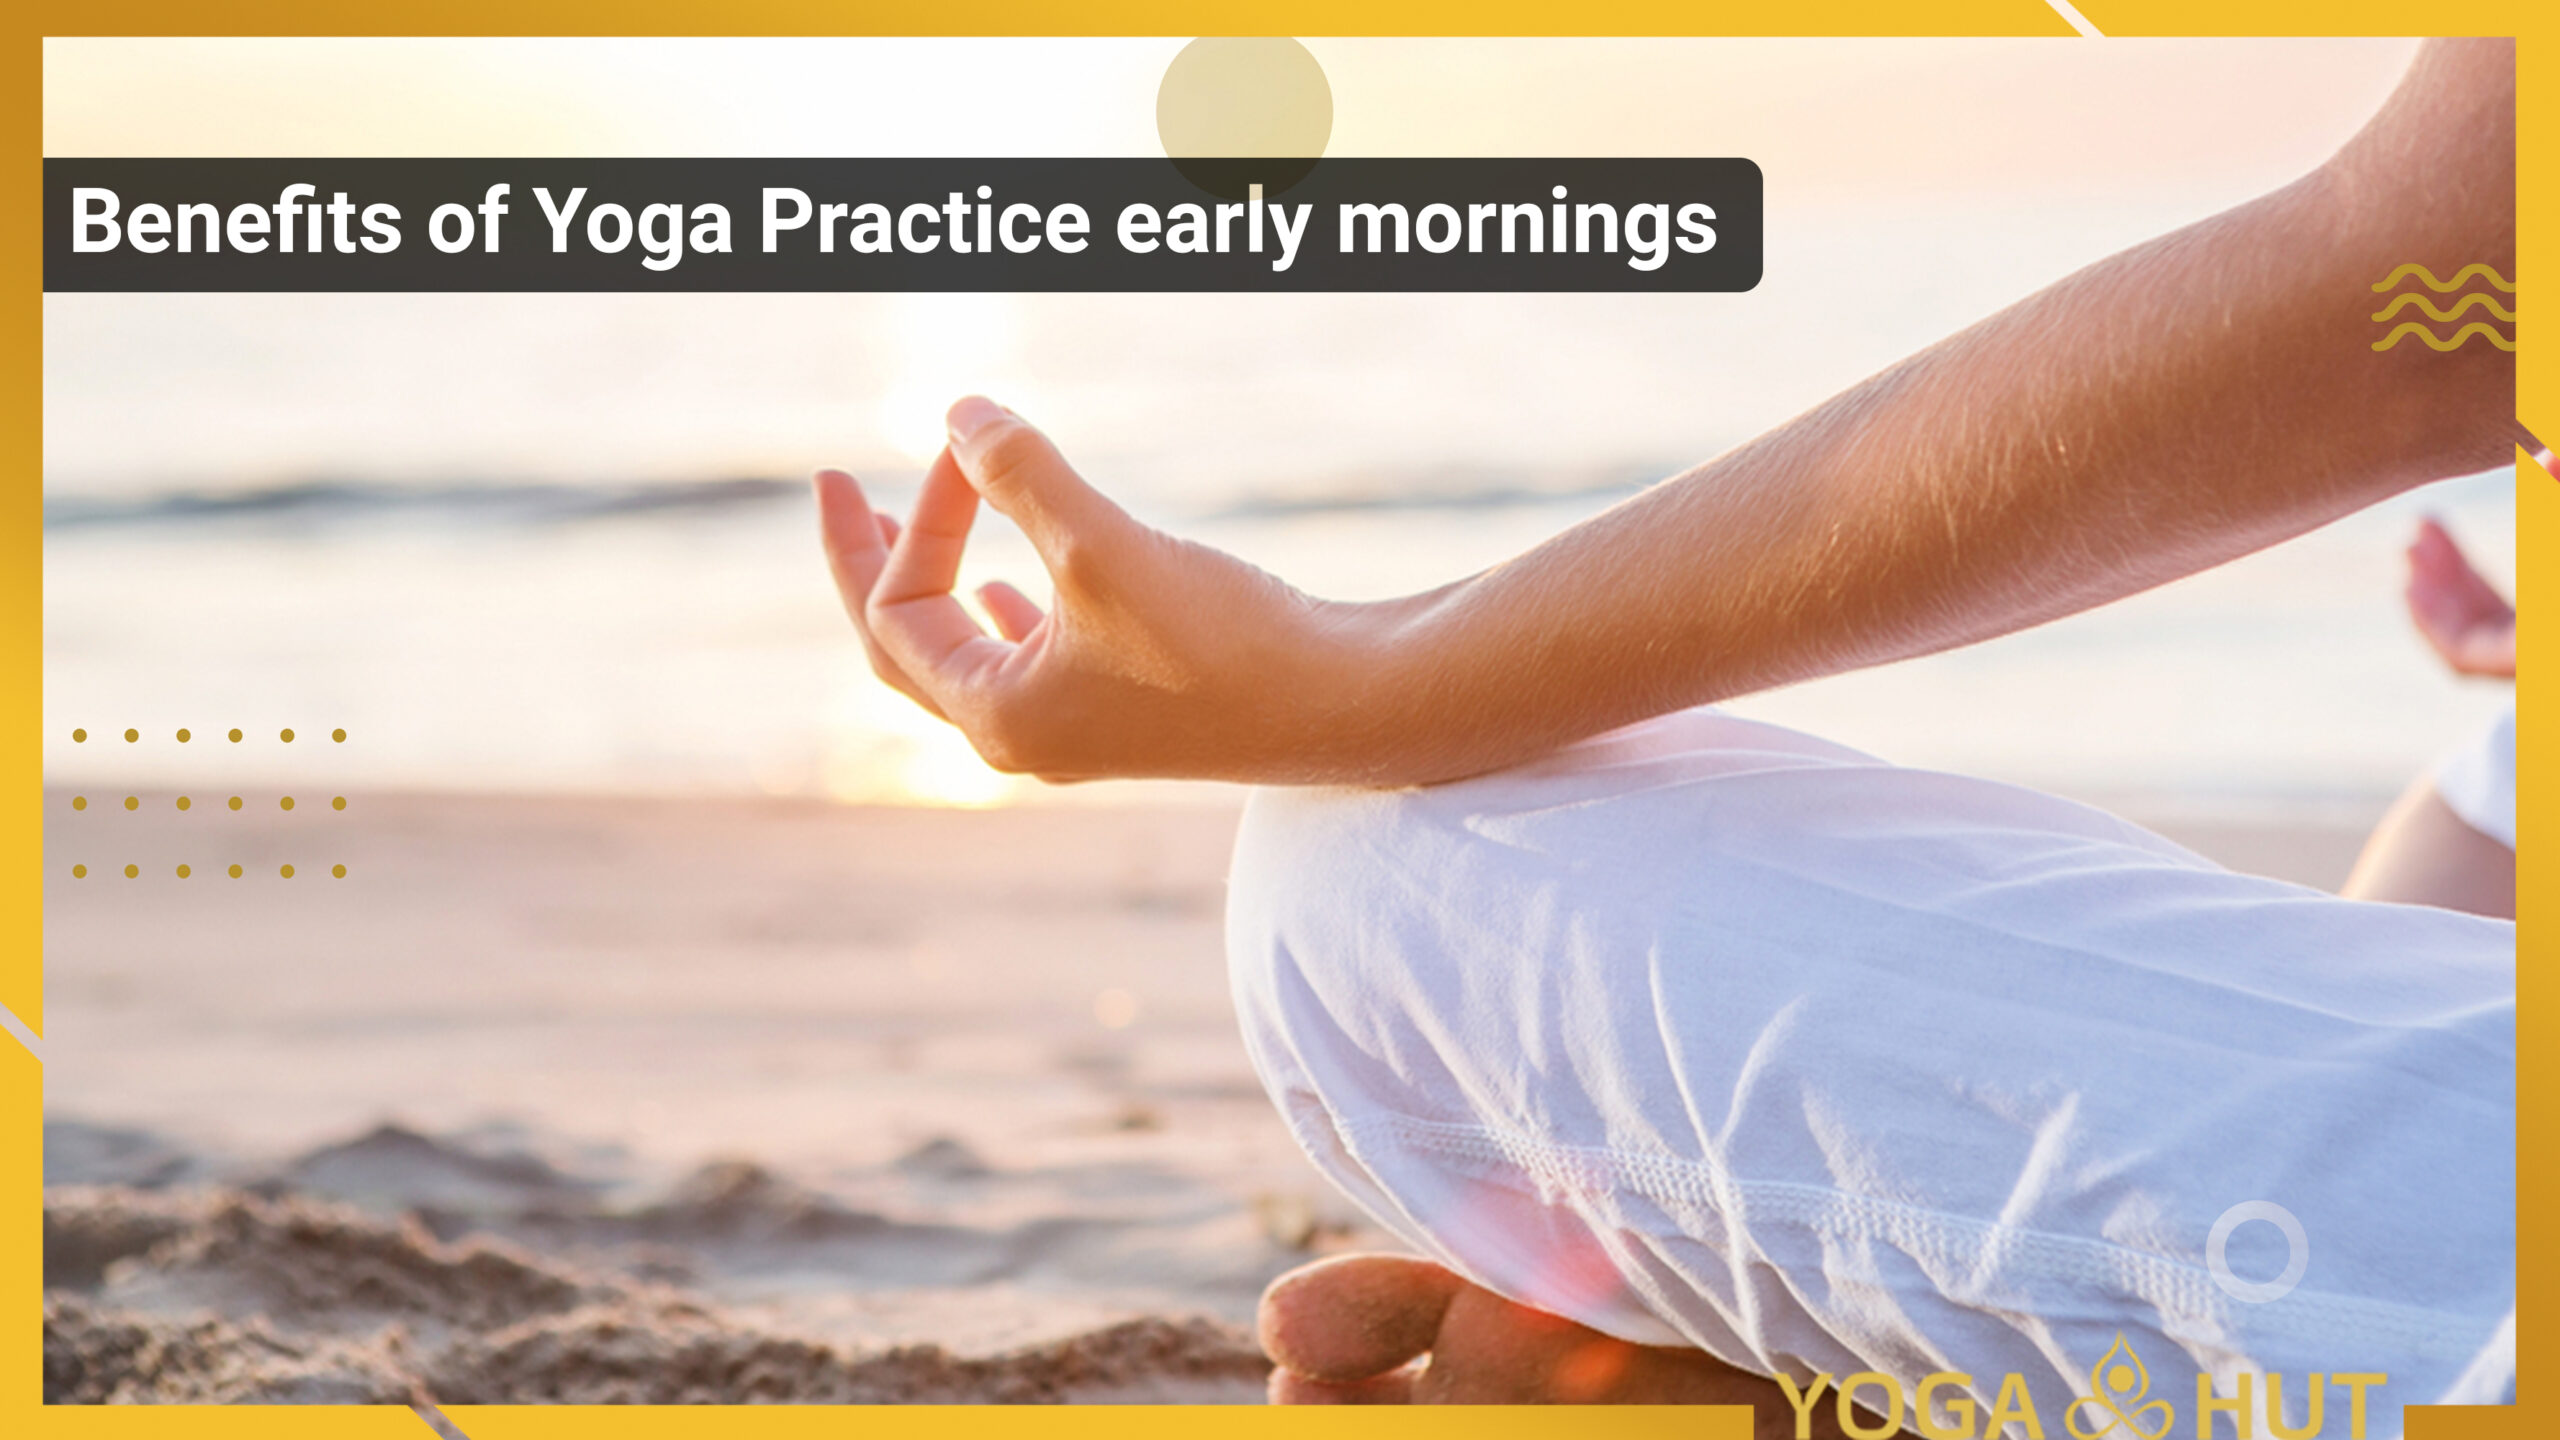 Benefits of Yoga Practice early mornings